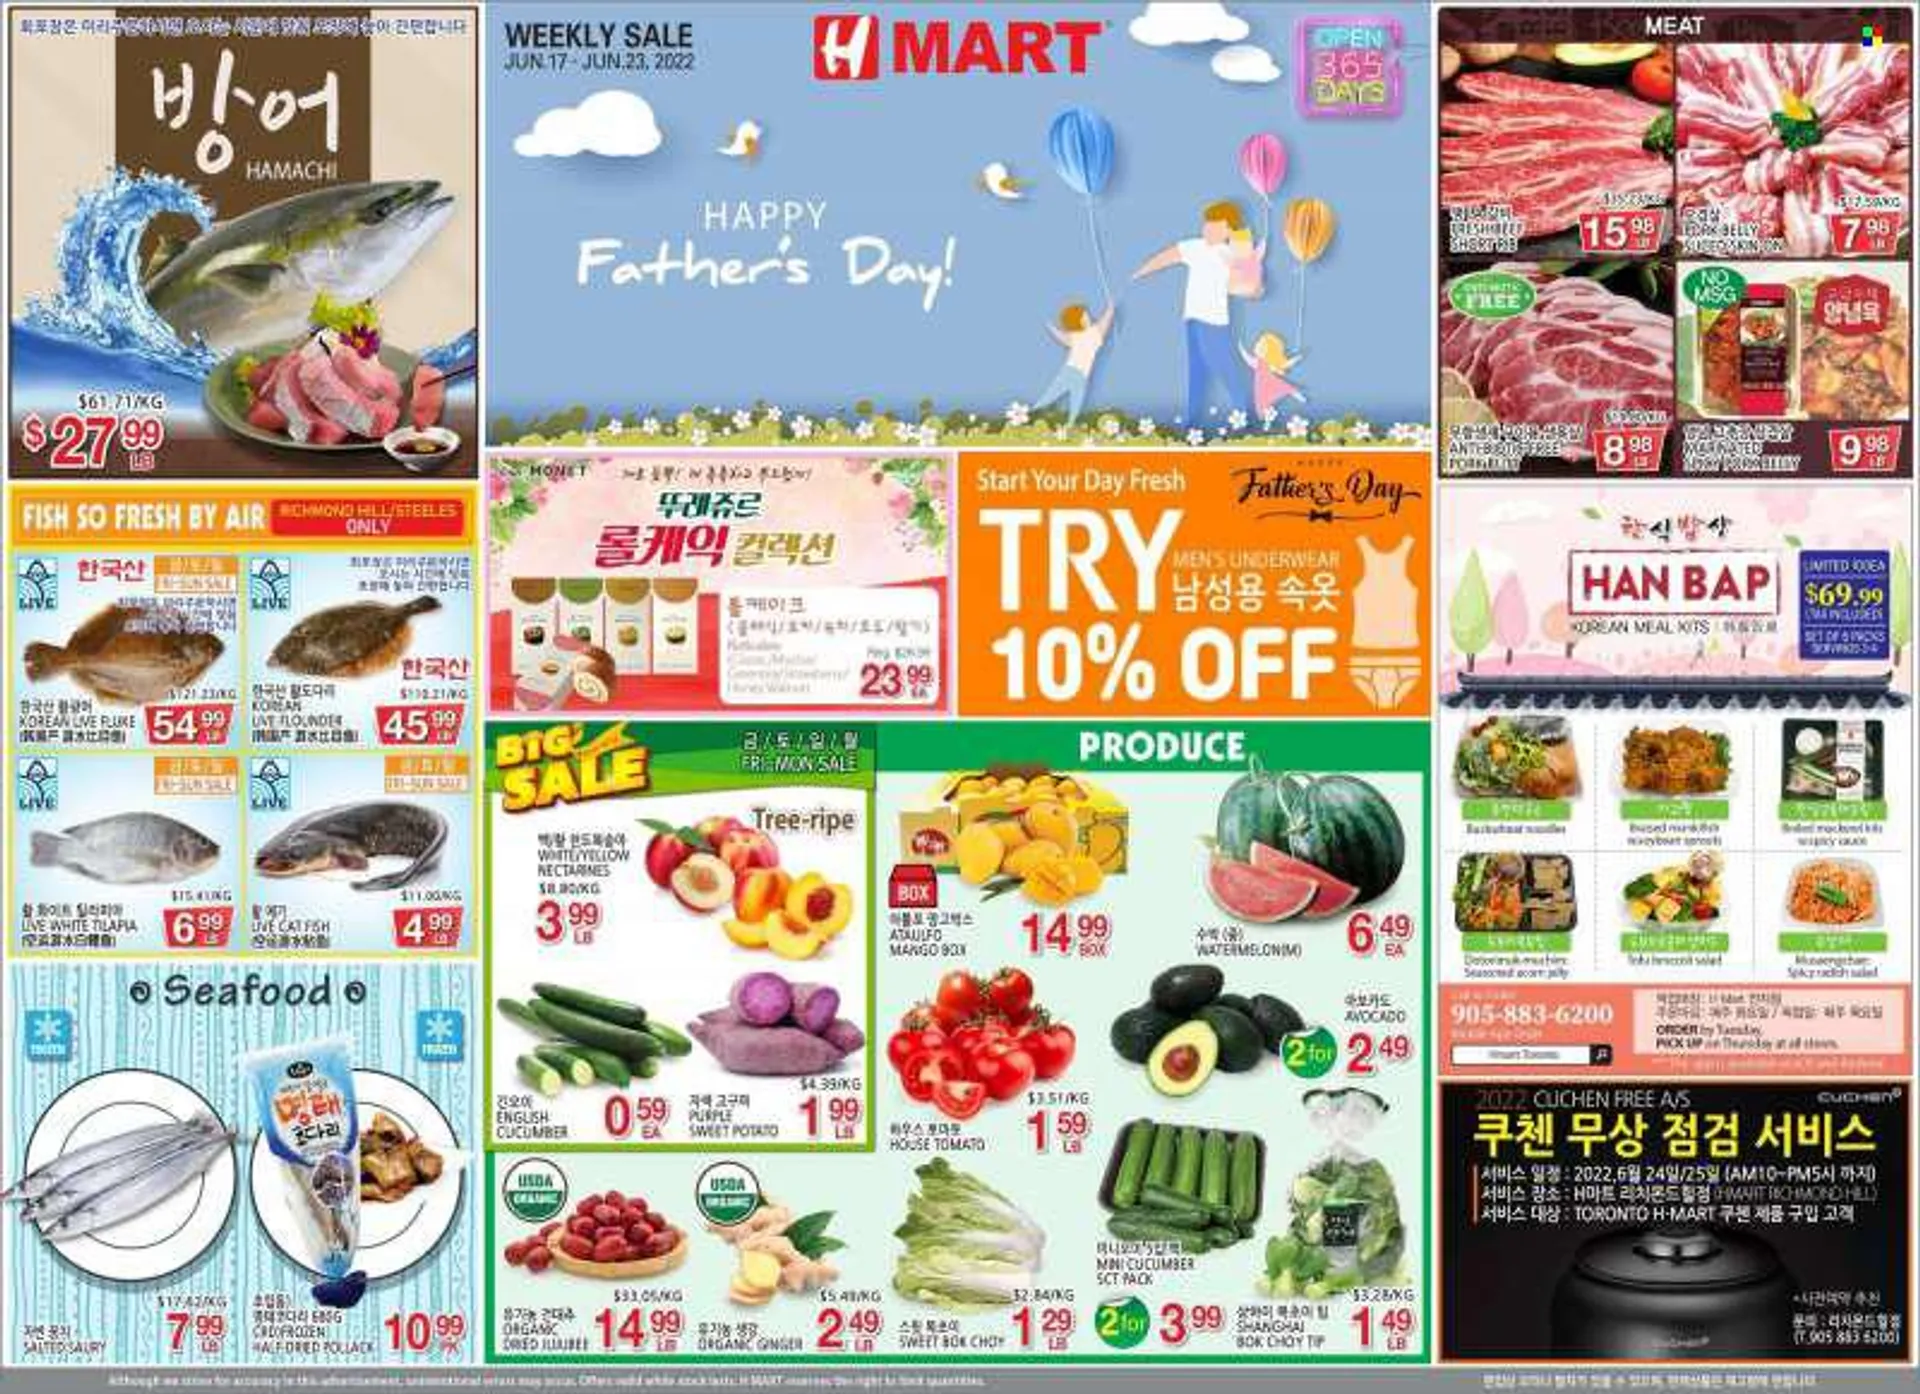 H Mart Flyer - June 17, 2022 - June 23, 2022 - Sales products - cake, bok choy, broccoli, ginger, radishes, sweet potato, salad, avocado, nectarines, watermelon, flounder, mackerel, tilapia, pollock, seafood, fish, sauce, noodles, tofu, jelly, buckwheat, 